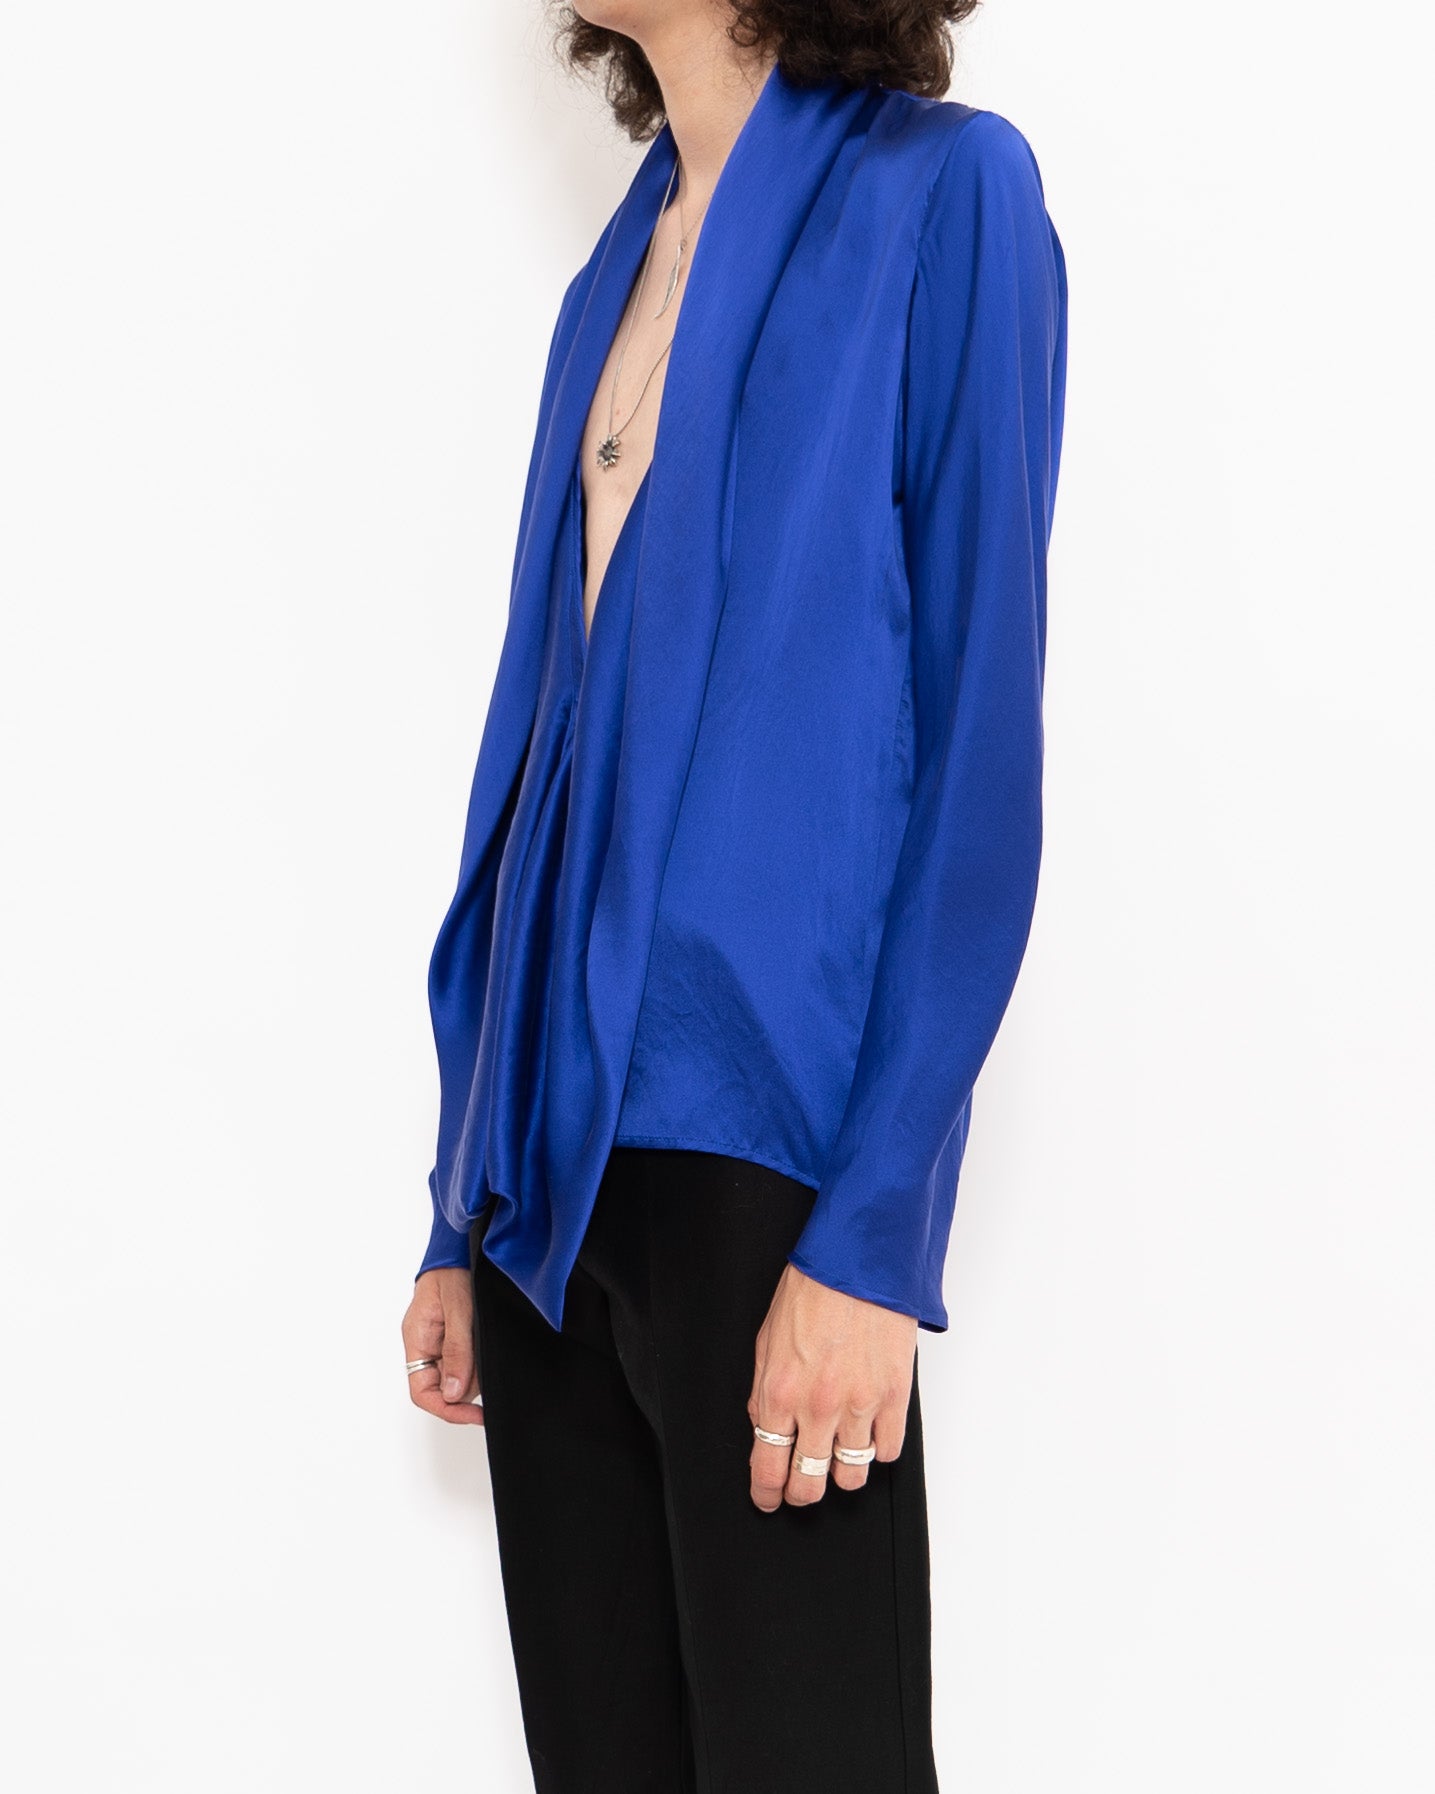 FW20 Dali Blue Drape Silk Shirt Sample